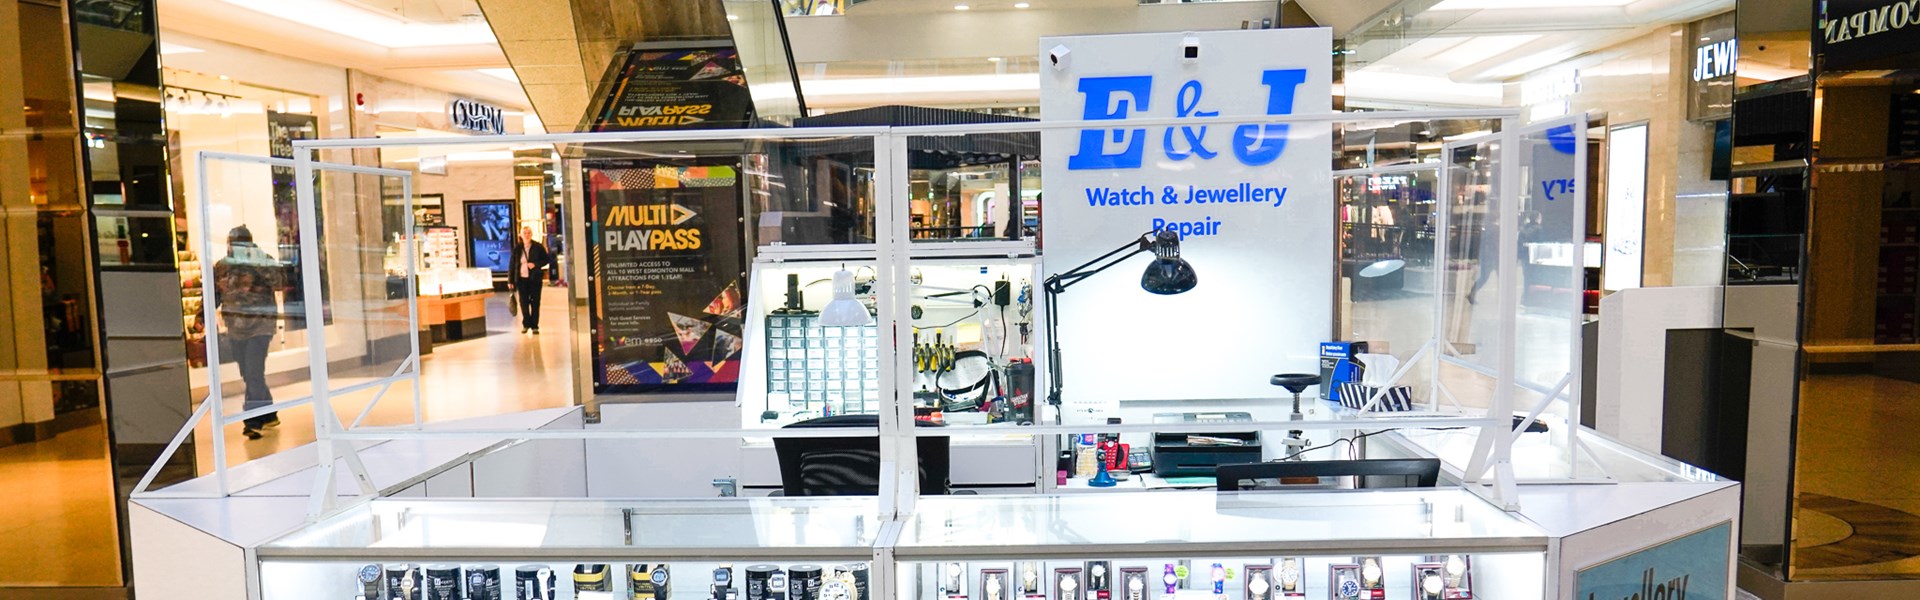 E&J Watch & Jewellery Repair